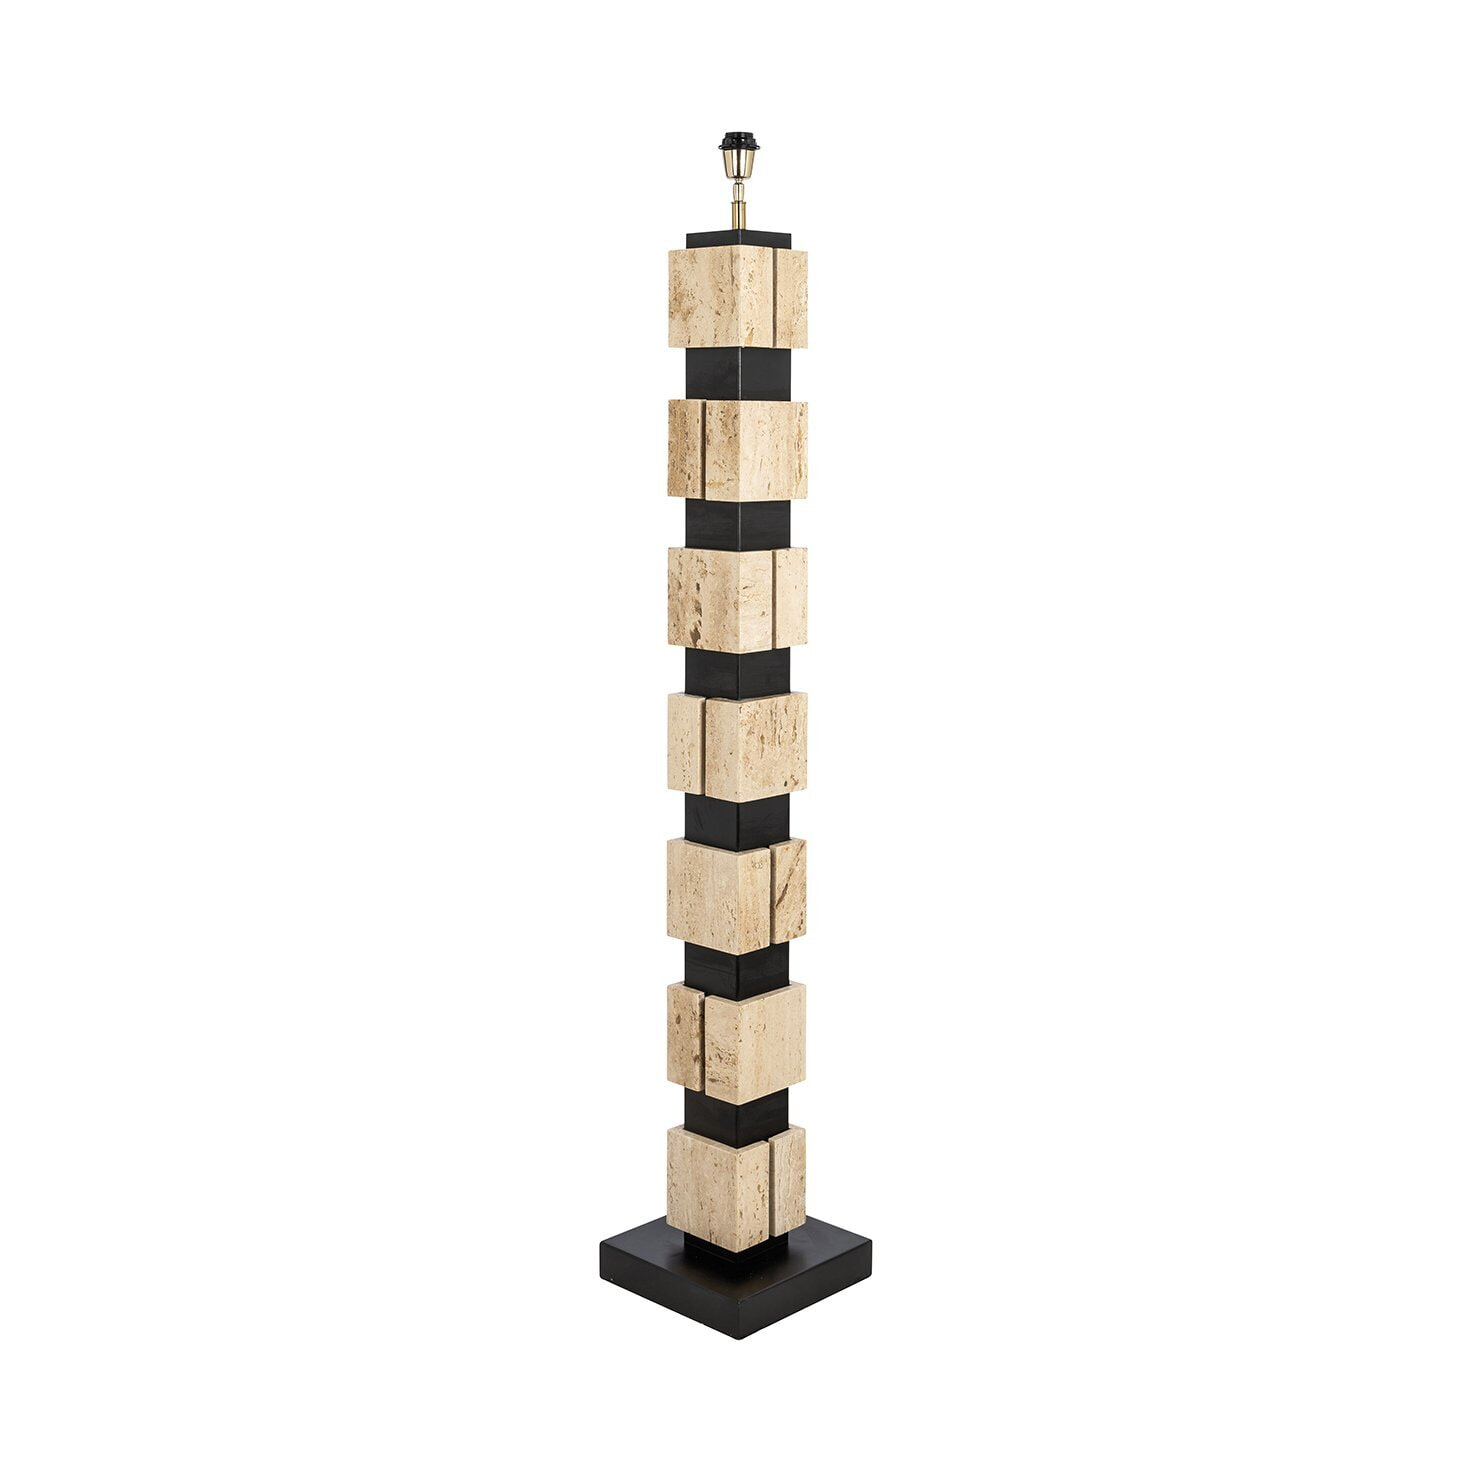 Richmond Vloerlamp Madiq Travertin 150.5cm hoog - Zwart